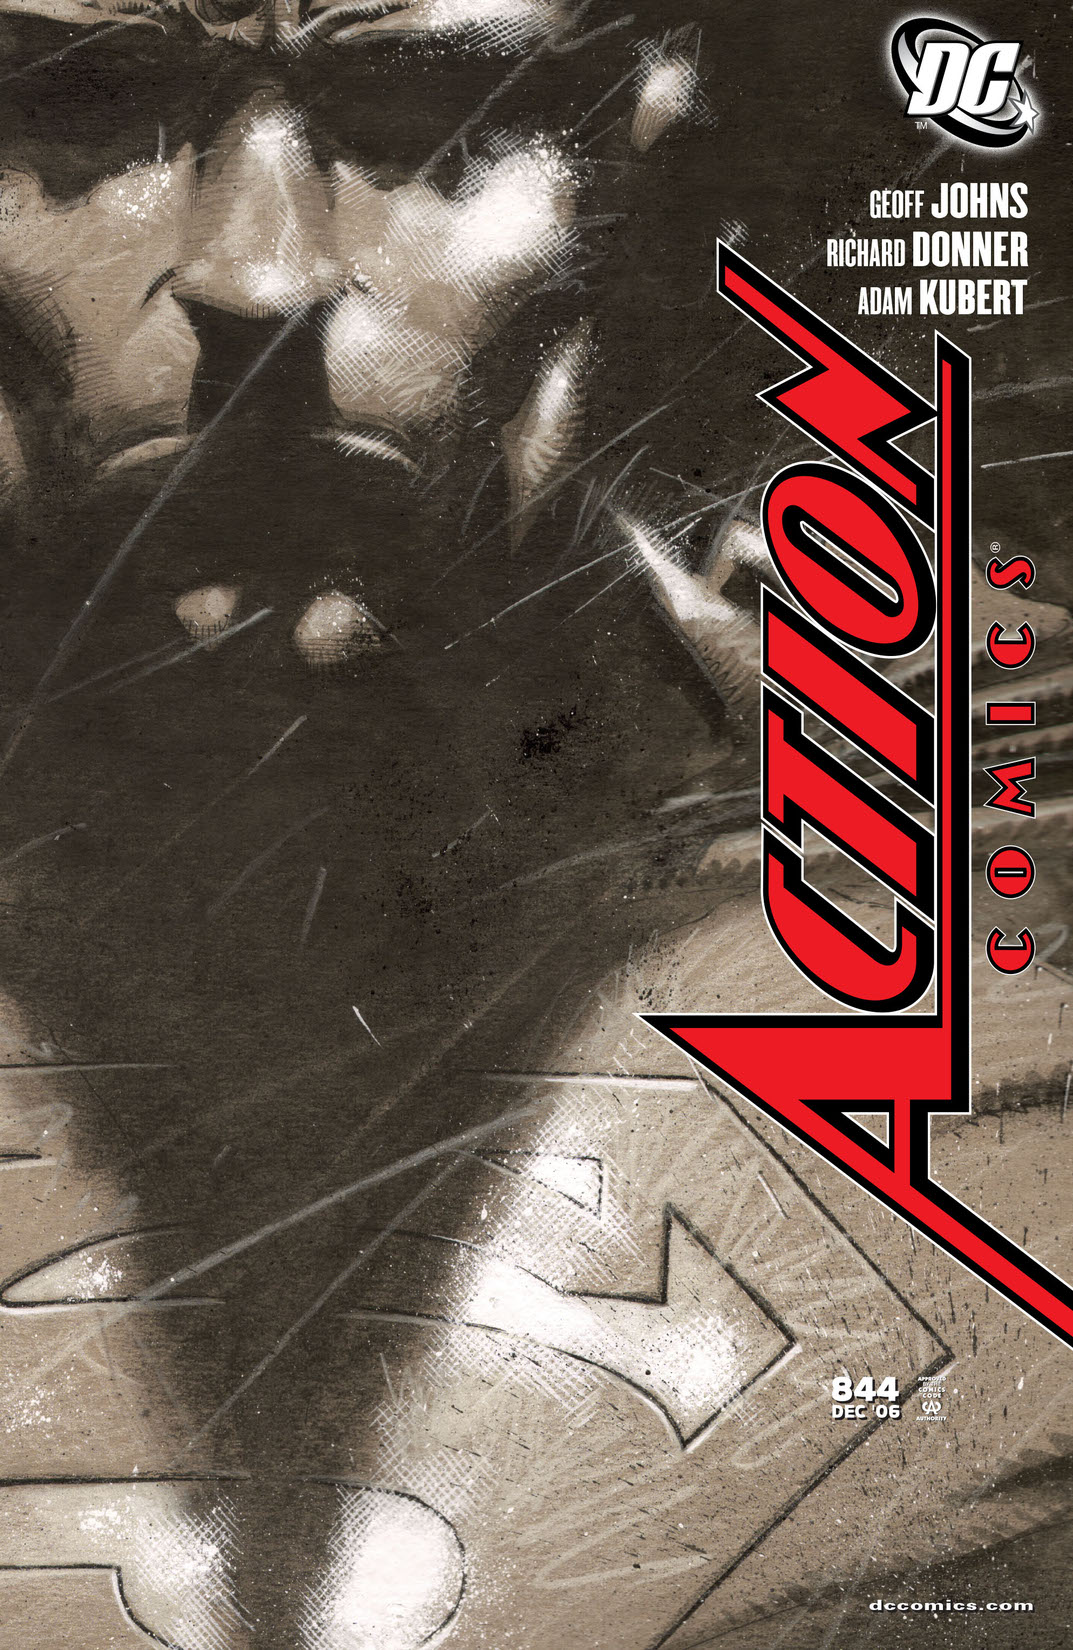 Action Comics (1938-) #844 preview images